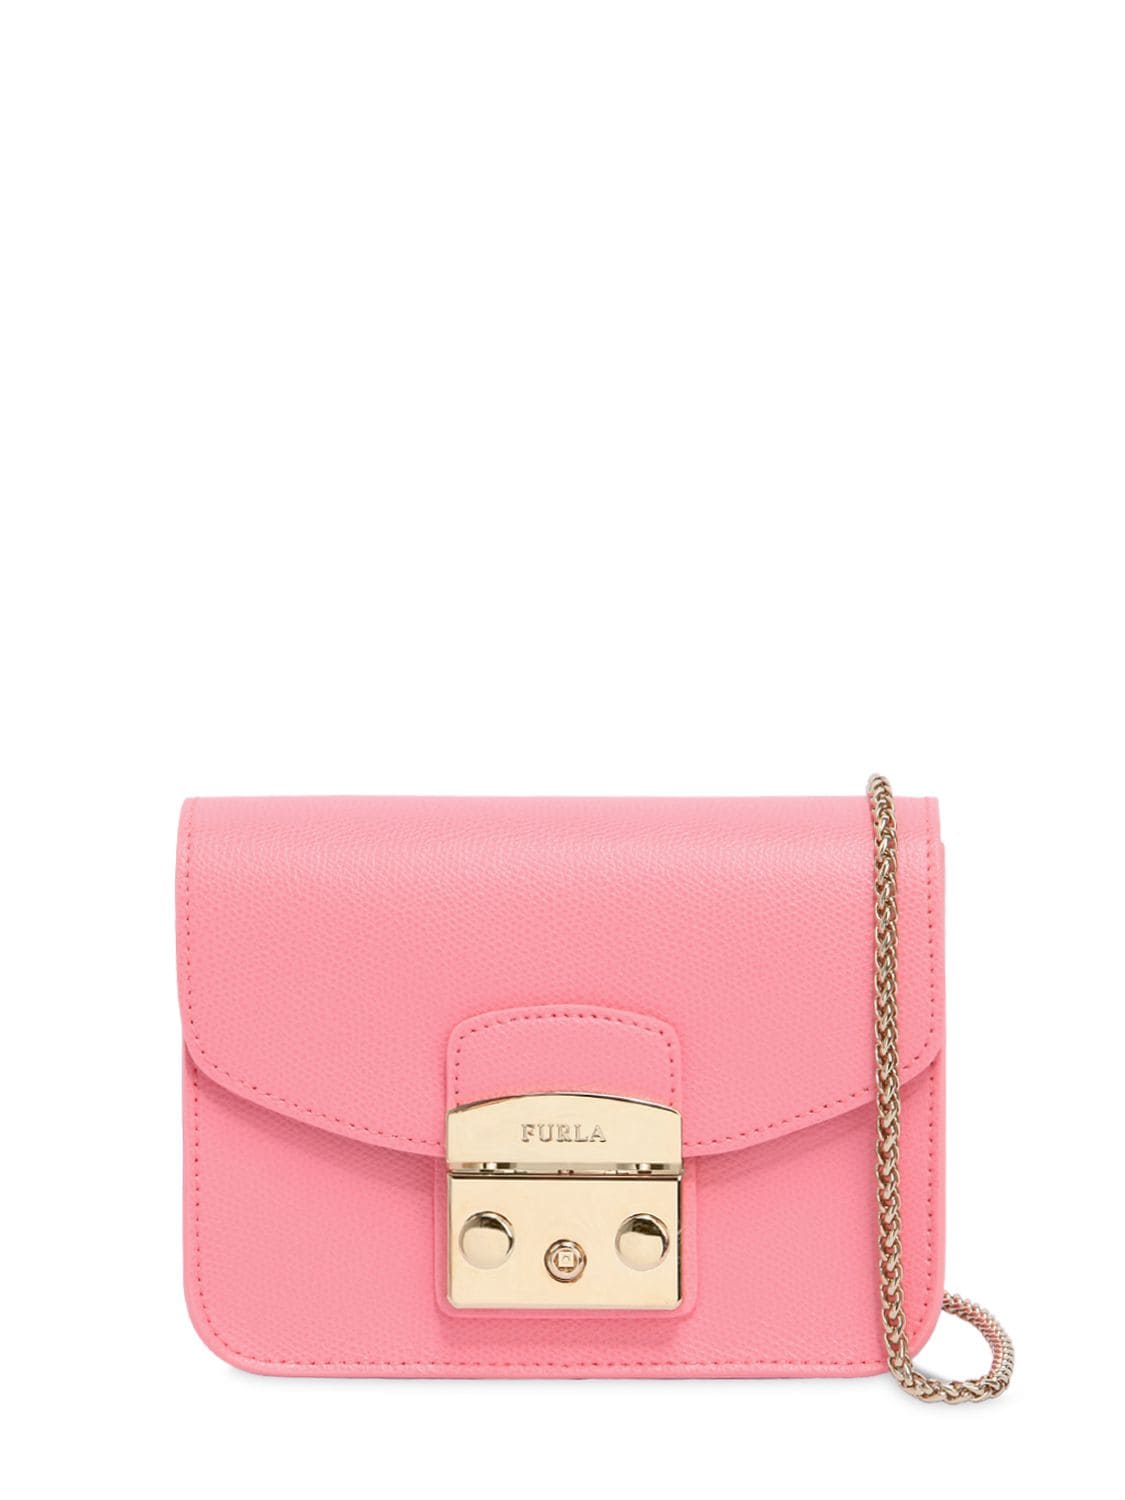 Furla Mini Metropolis Saffiano Leather Bag In Peach Pink